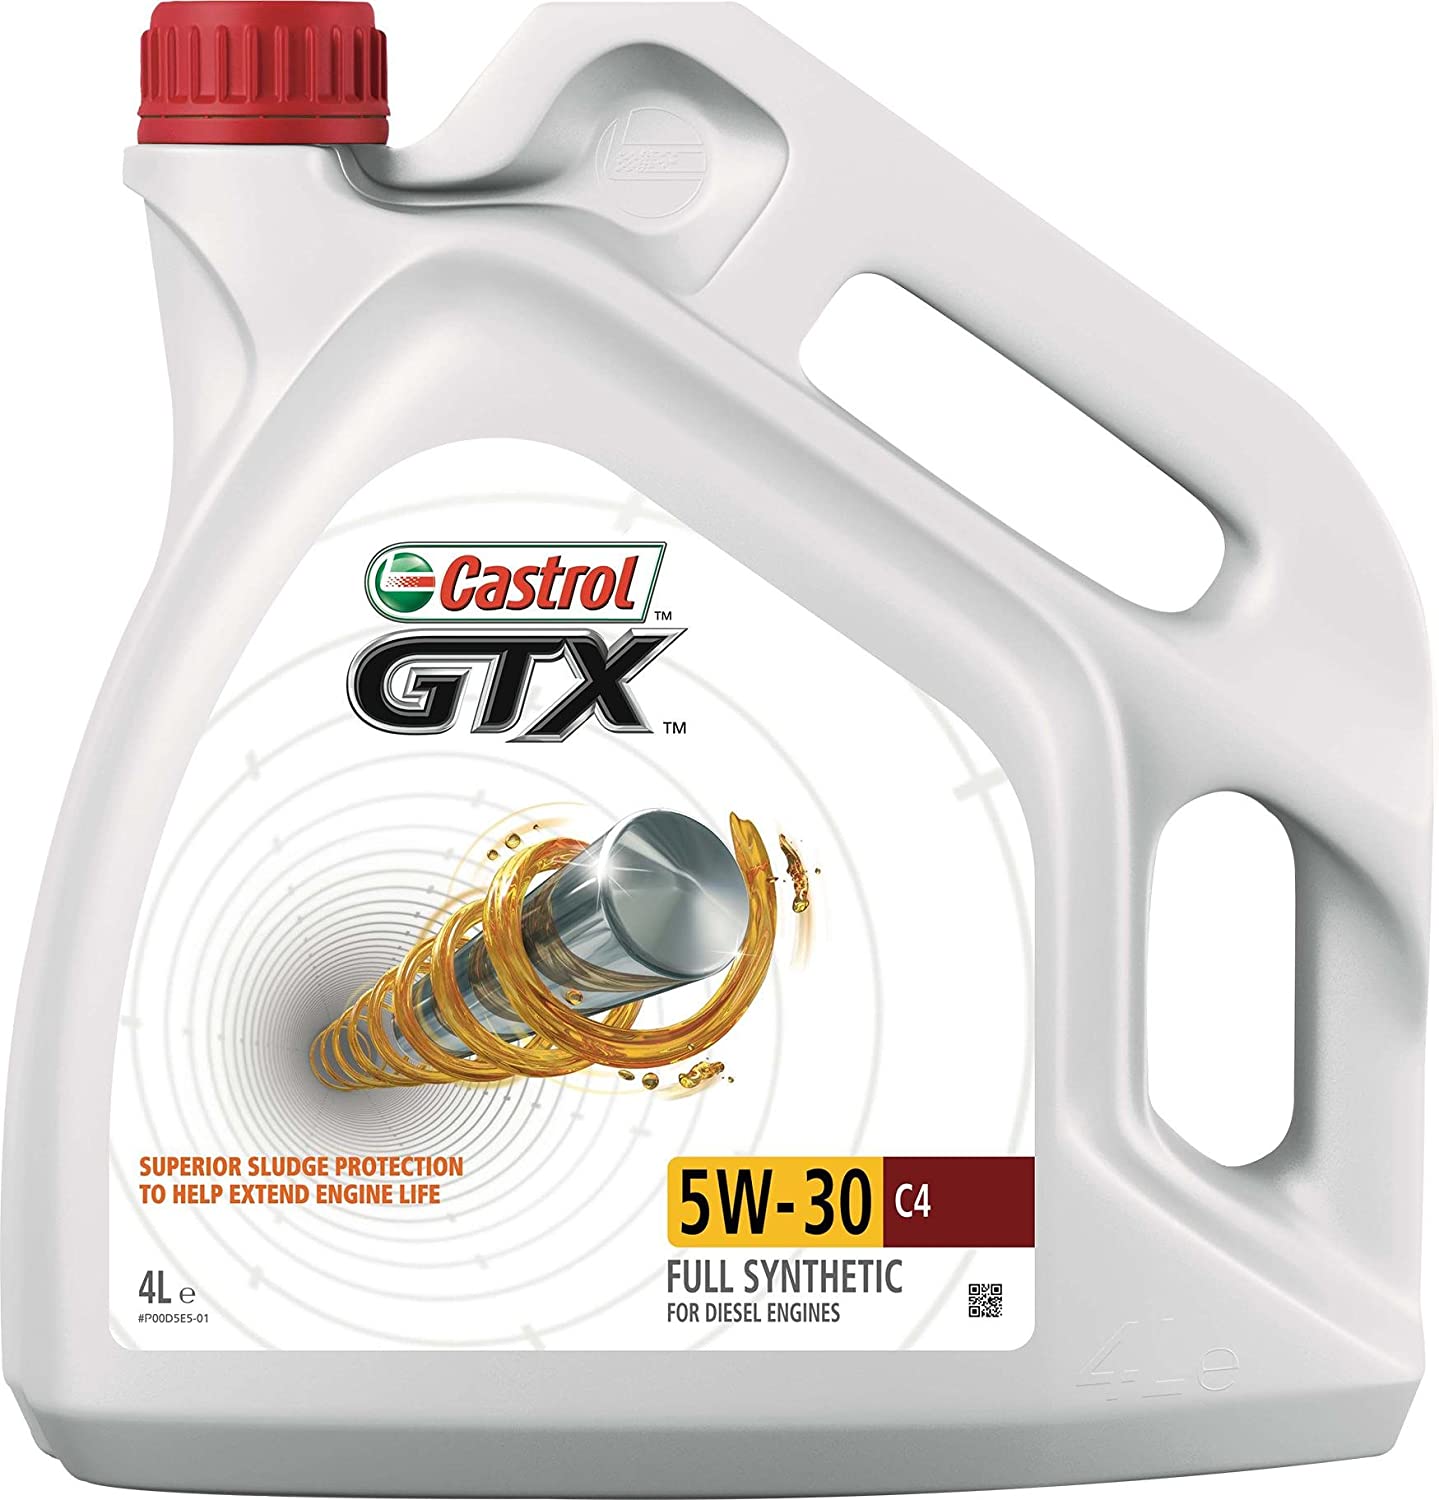 CAGTX5W30C44 CASTROL CASTROL GTX 5W-30 C4 4 Liter